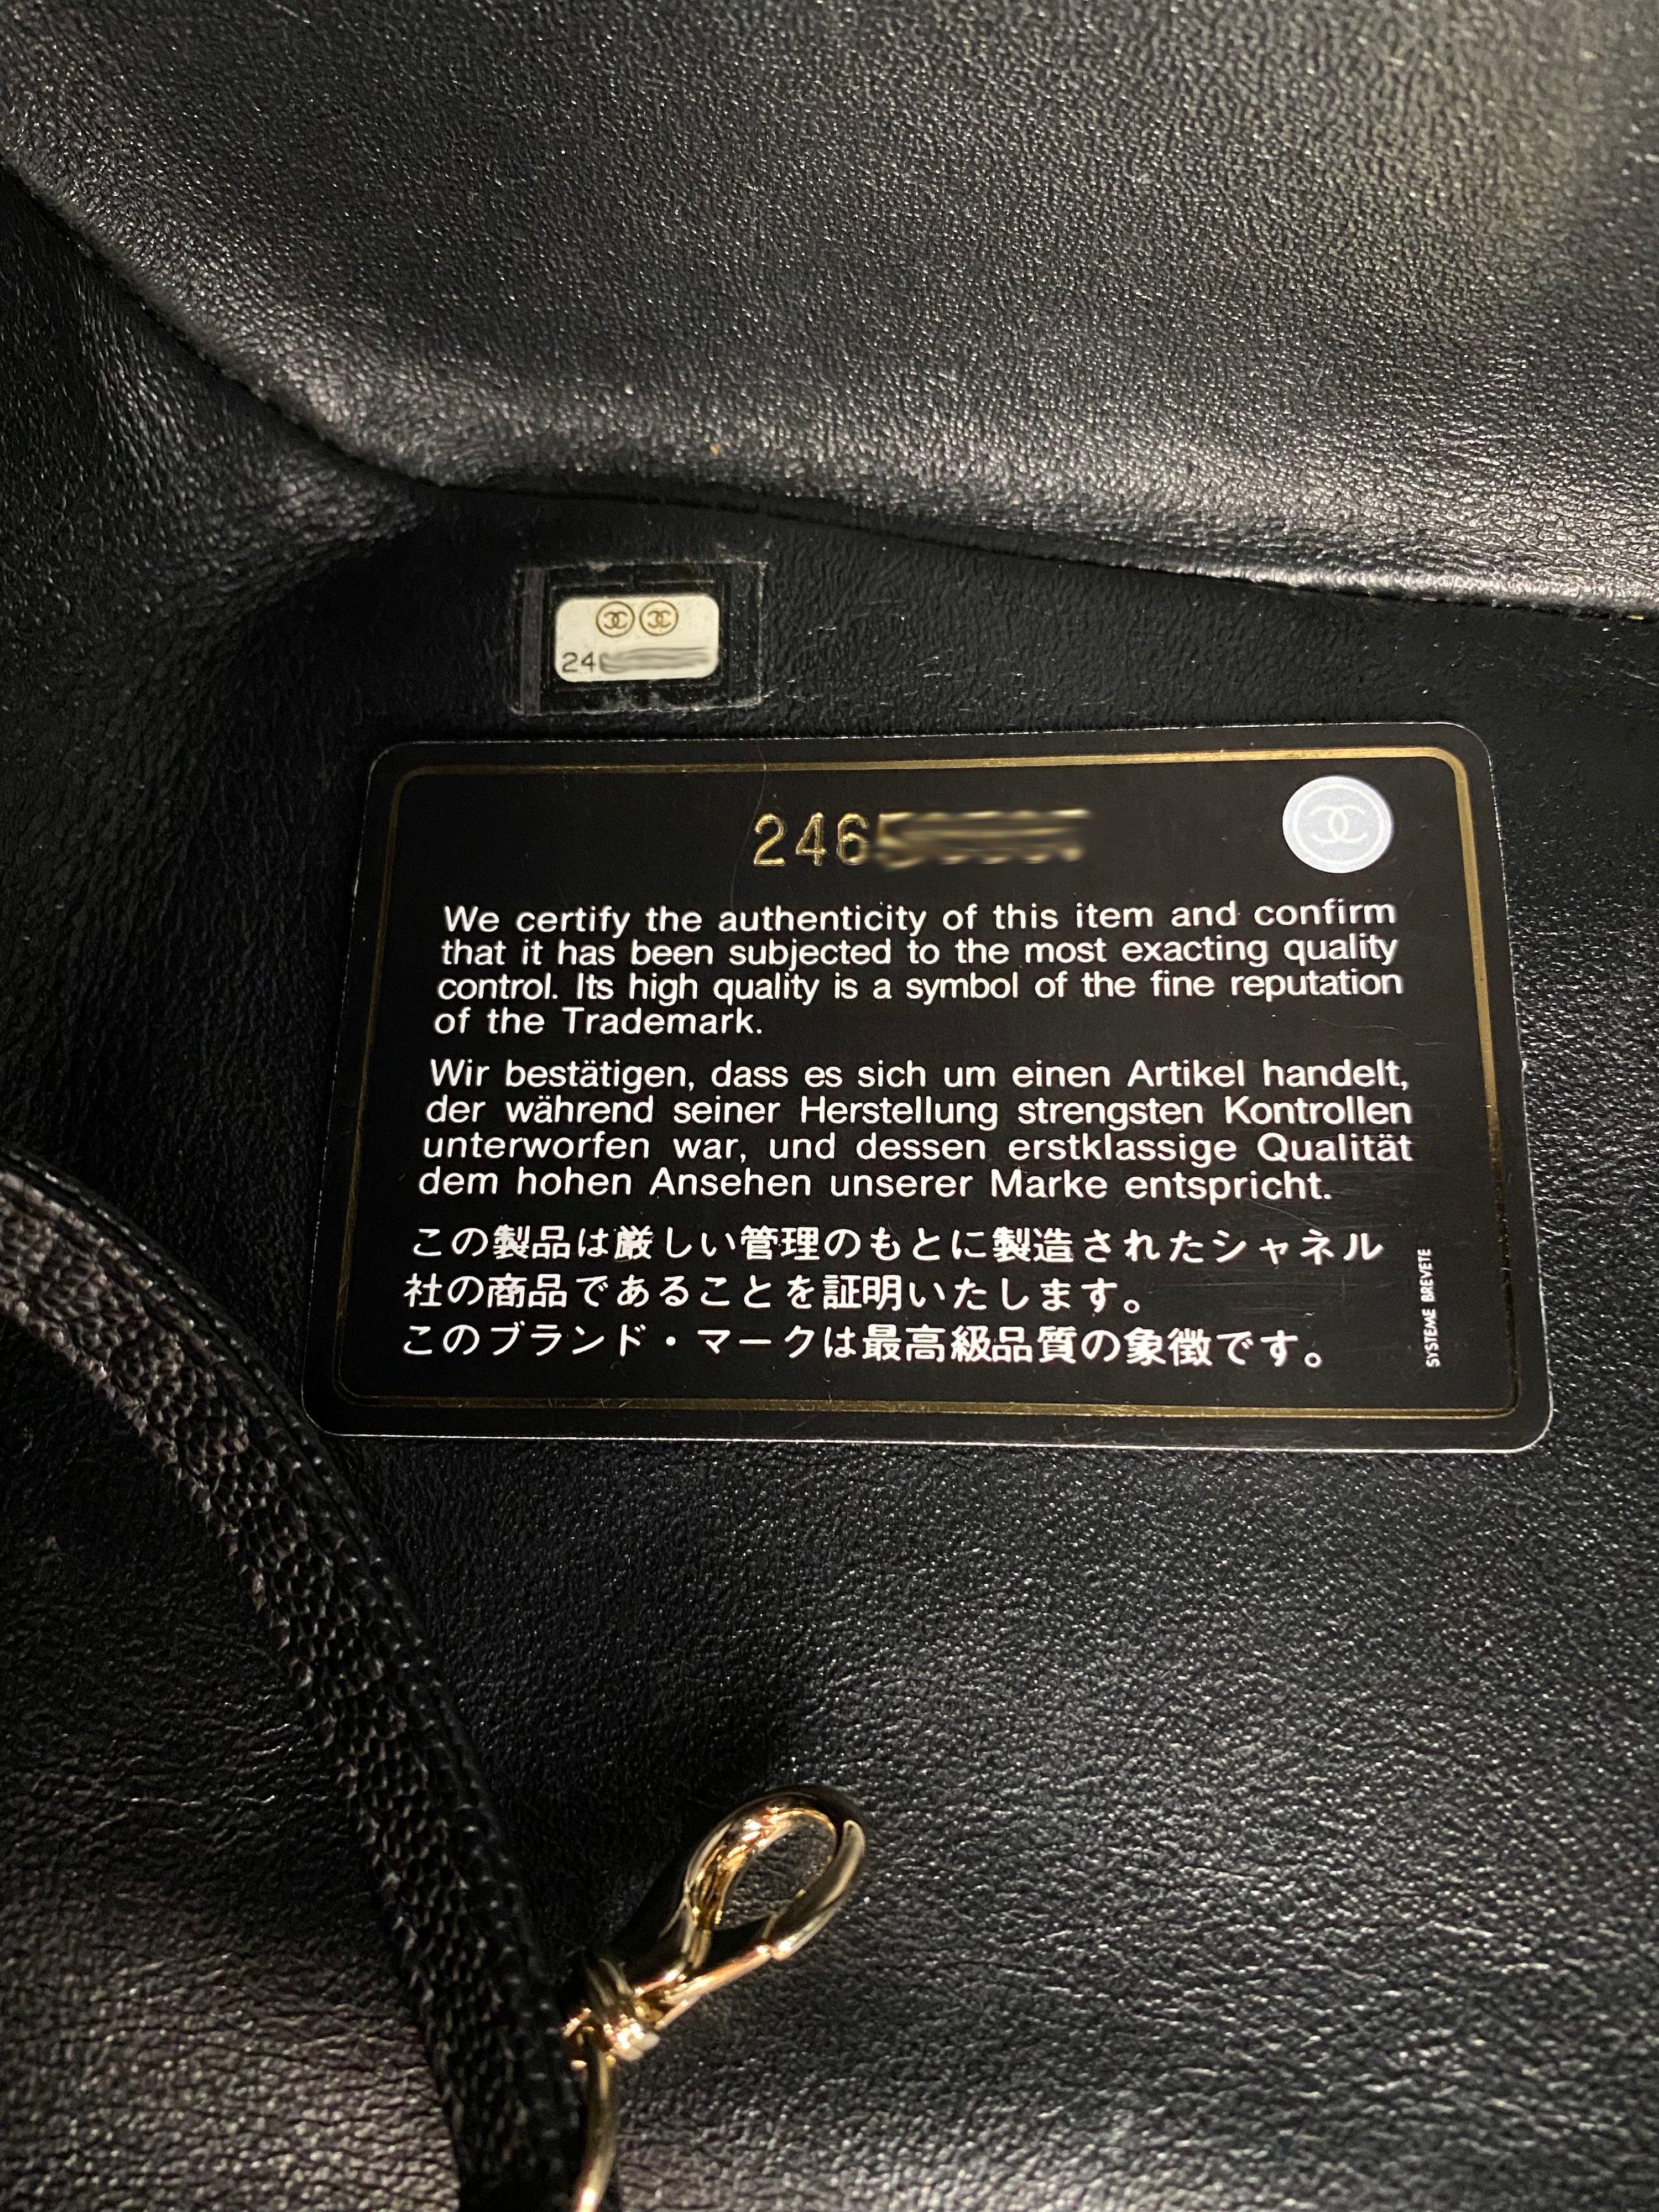 Chanel Black Business Affinity Backpack